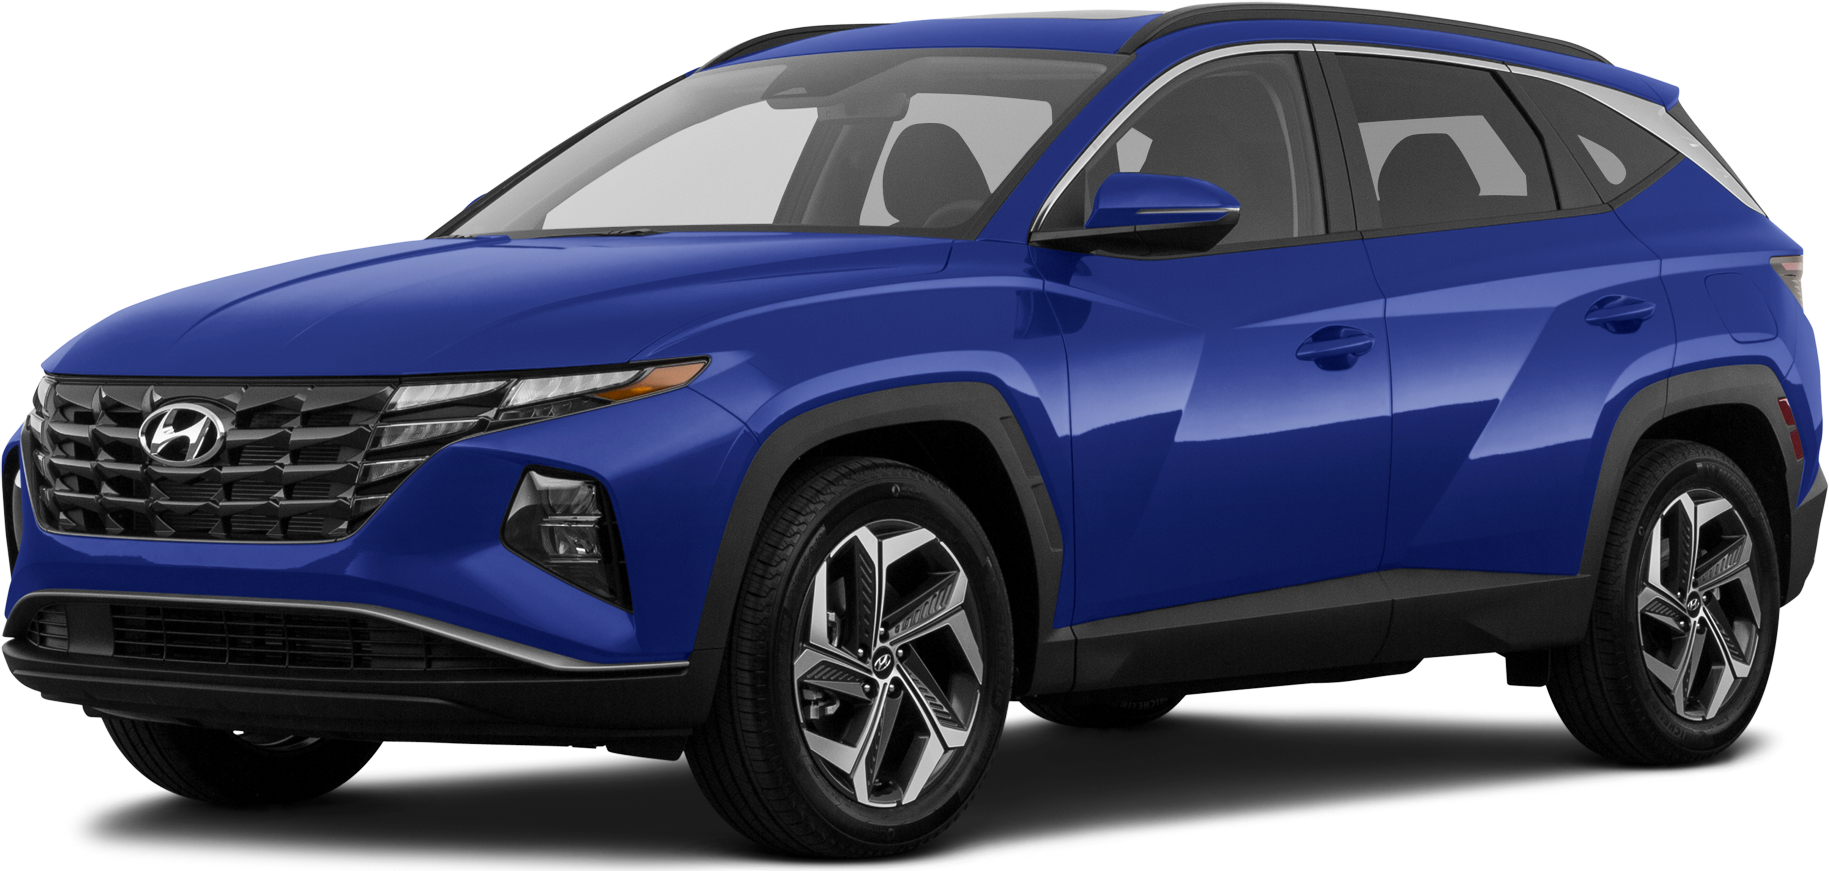 2022 Hyundai Tucson Reviews, Pricing & Specs | Kelley Blue Book